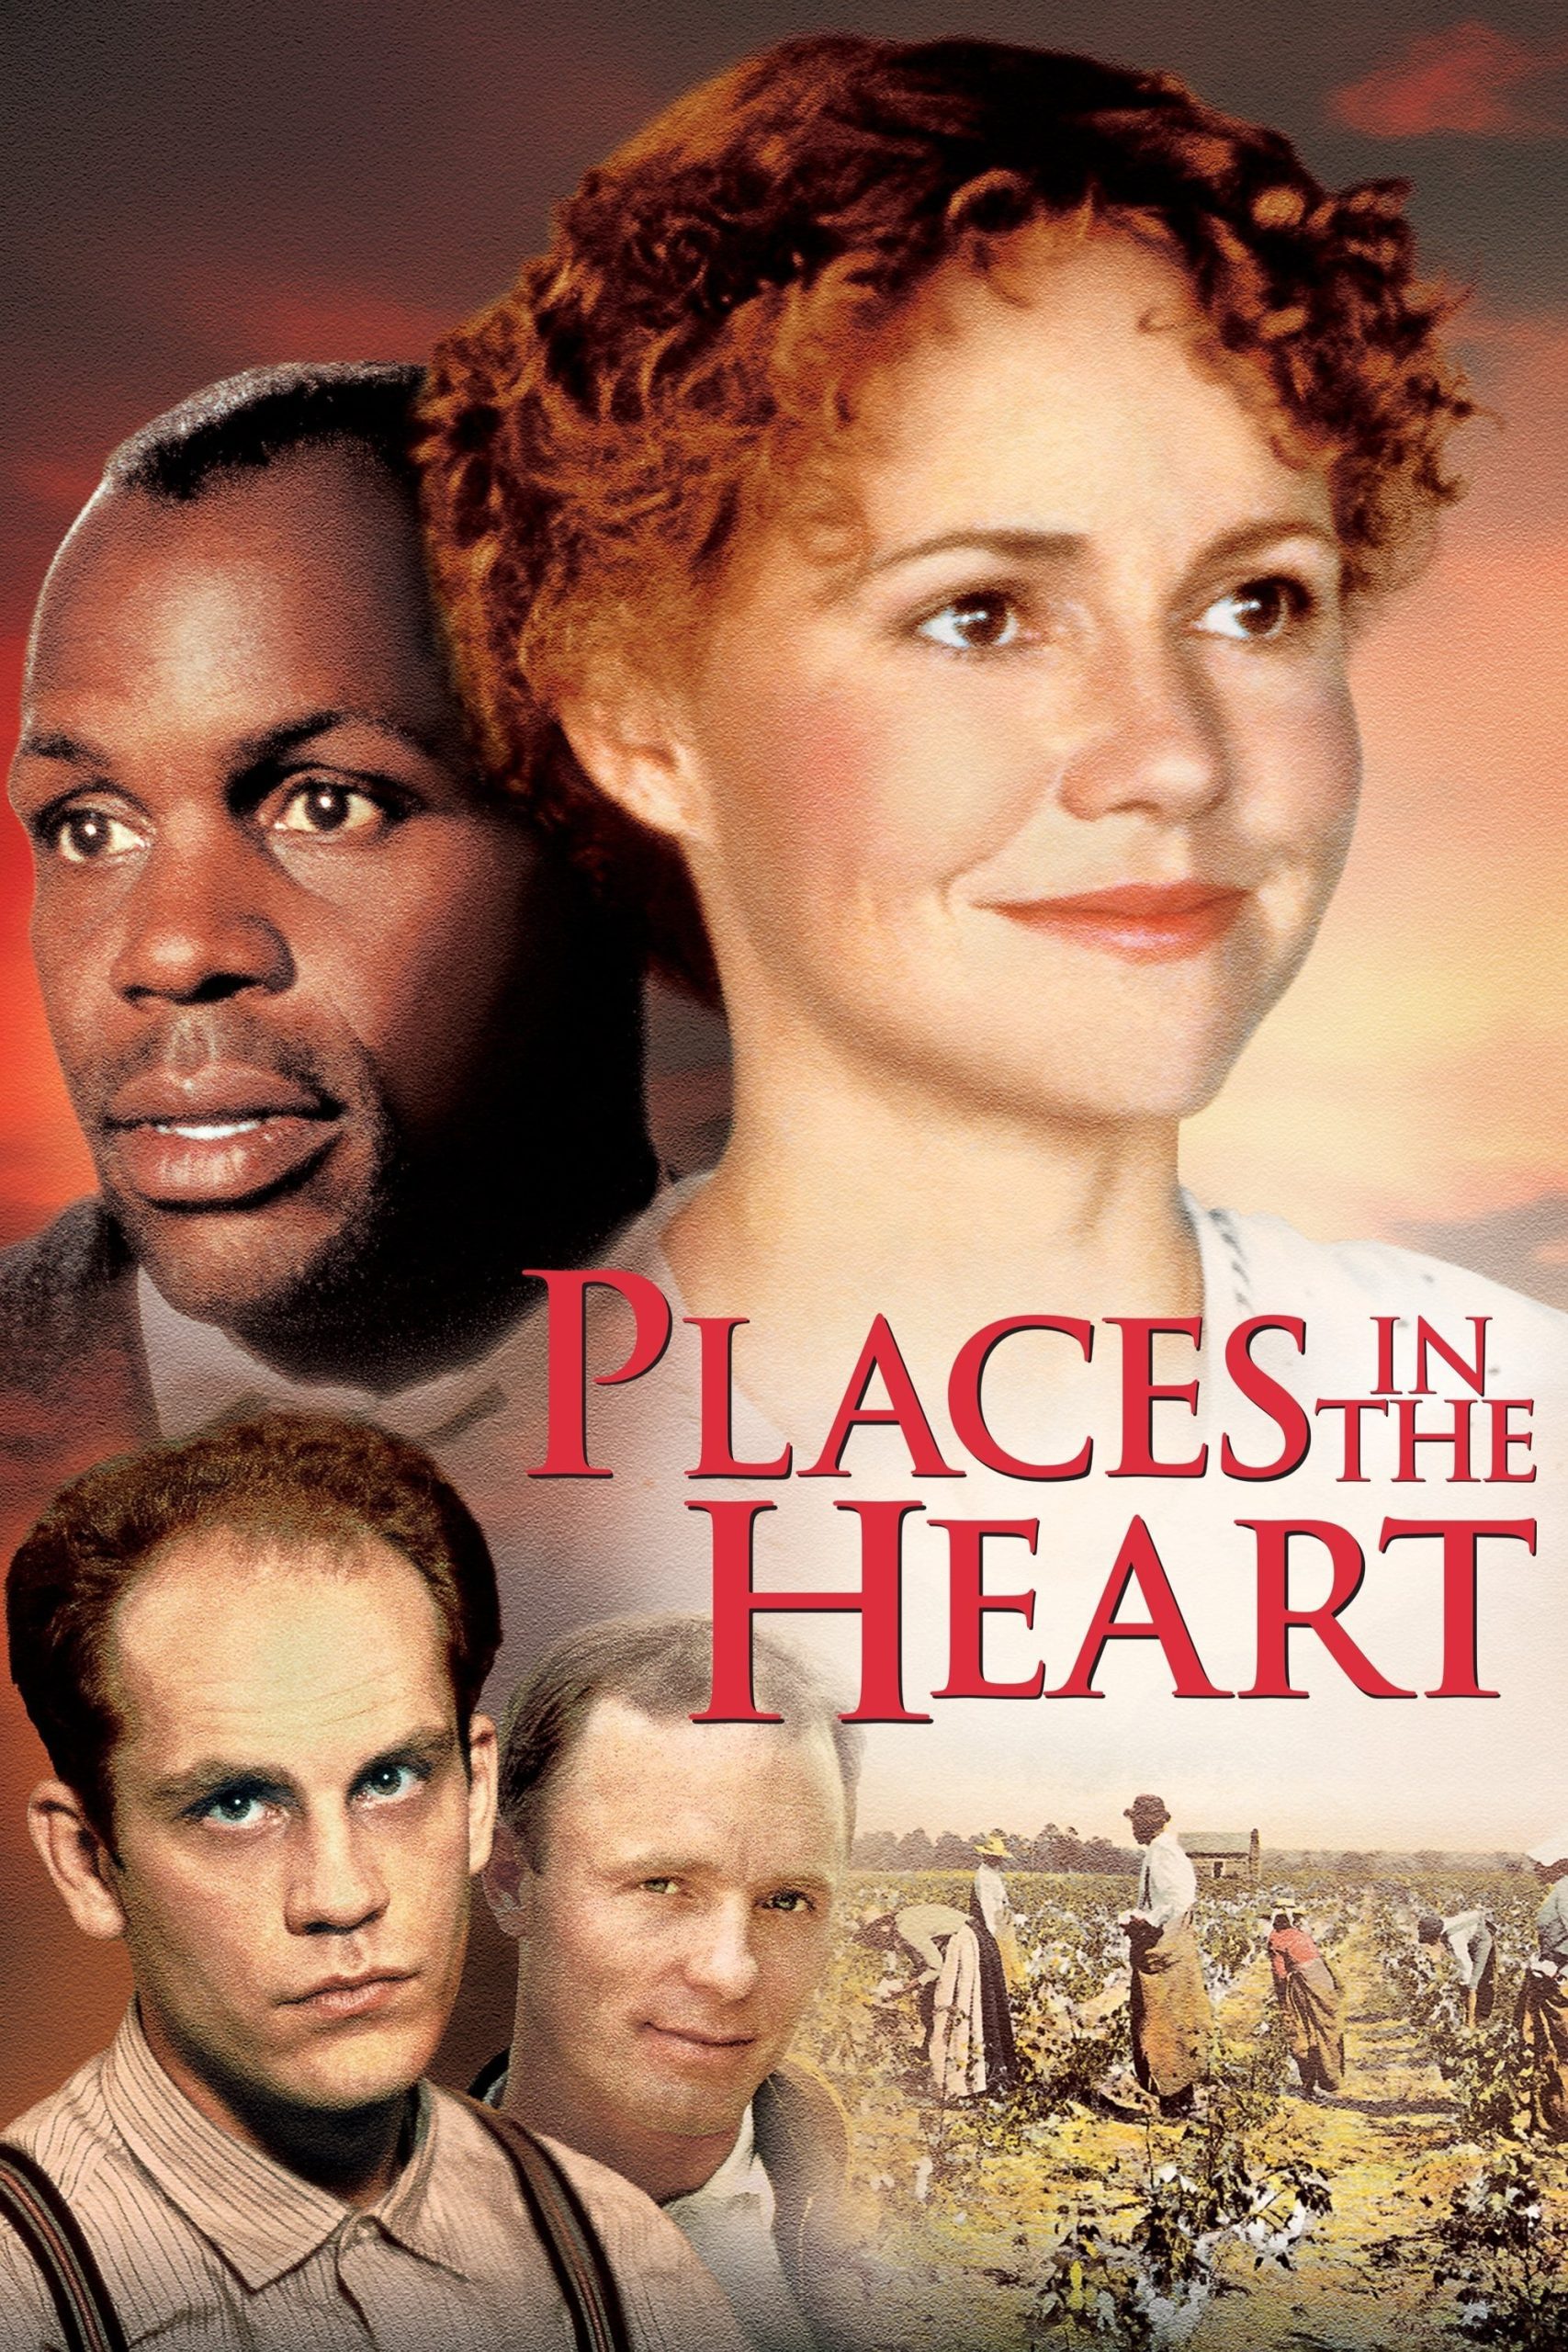 دانلود صوت دوبله فیلم Places in the Heart